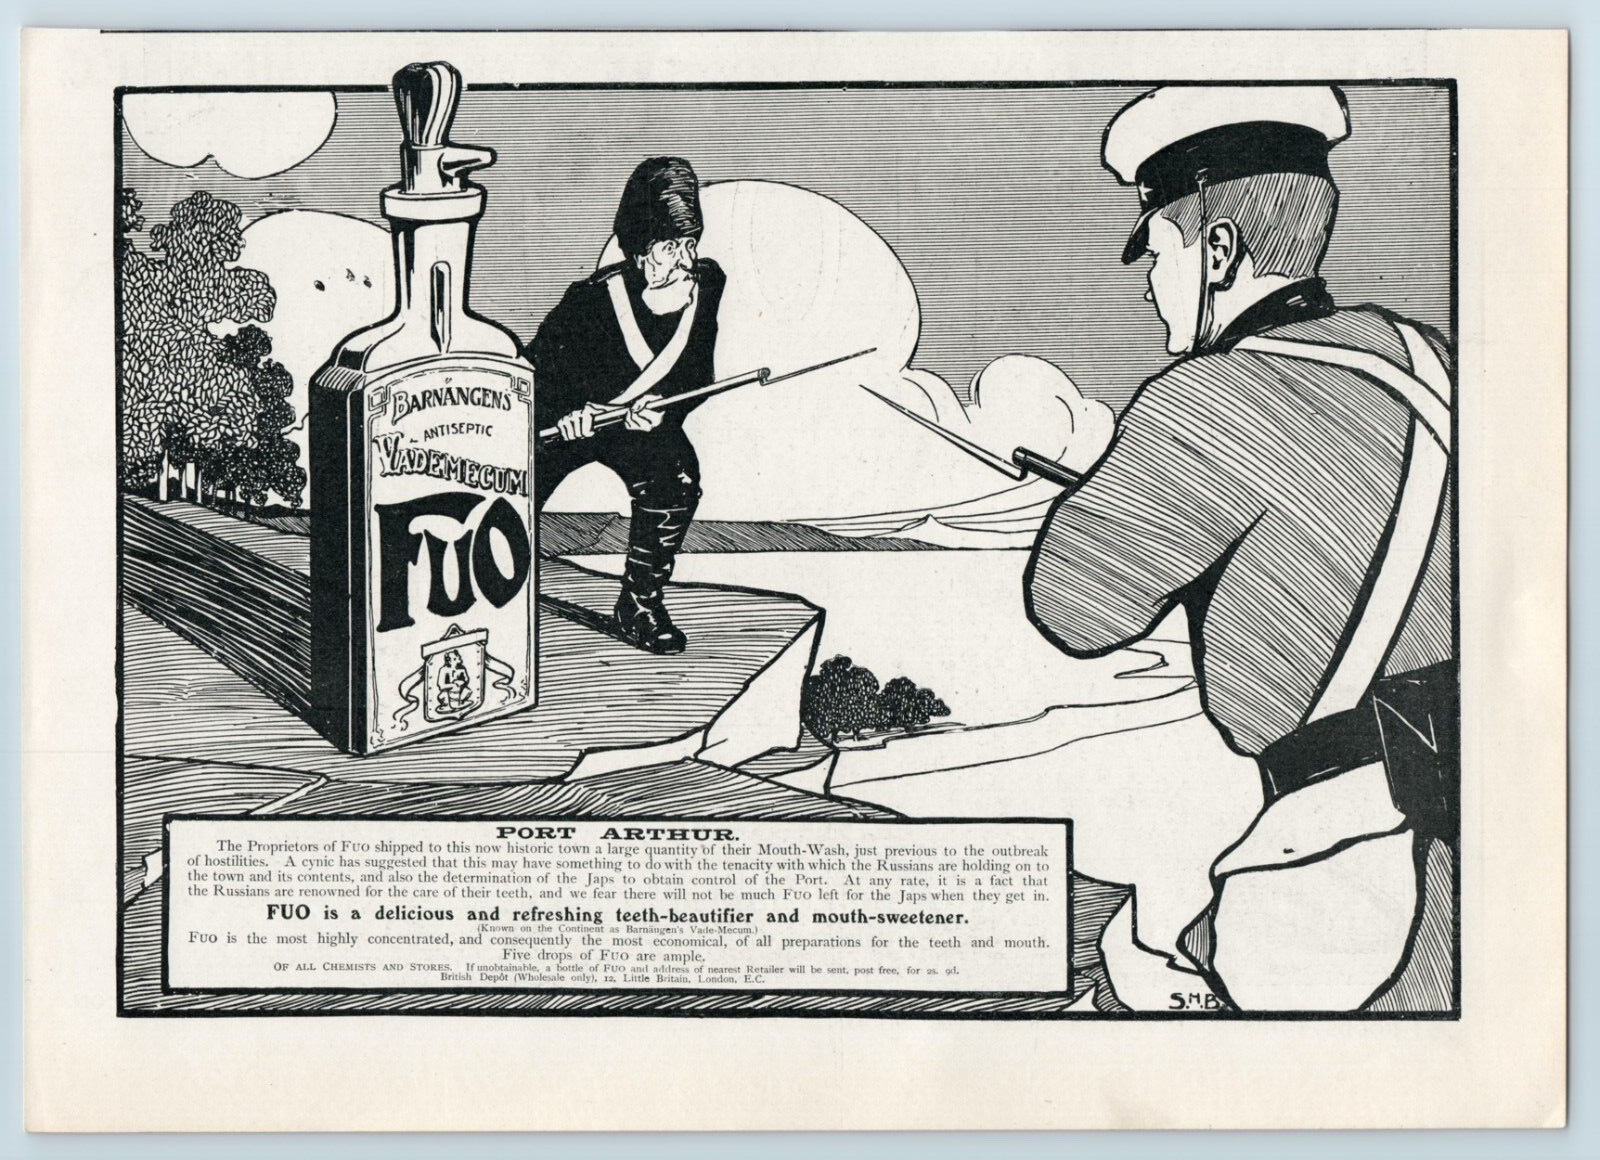 1904 Advert, Fuo Mouthwash, Barnangen's Antiseptic Vademecum, Russo-Japanese War